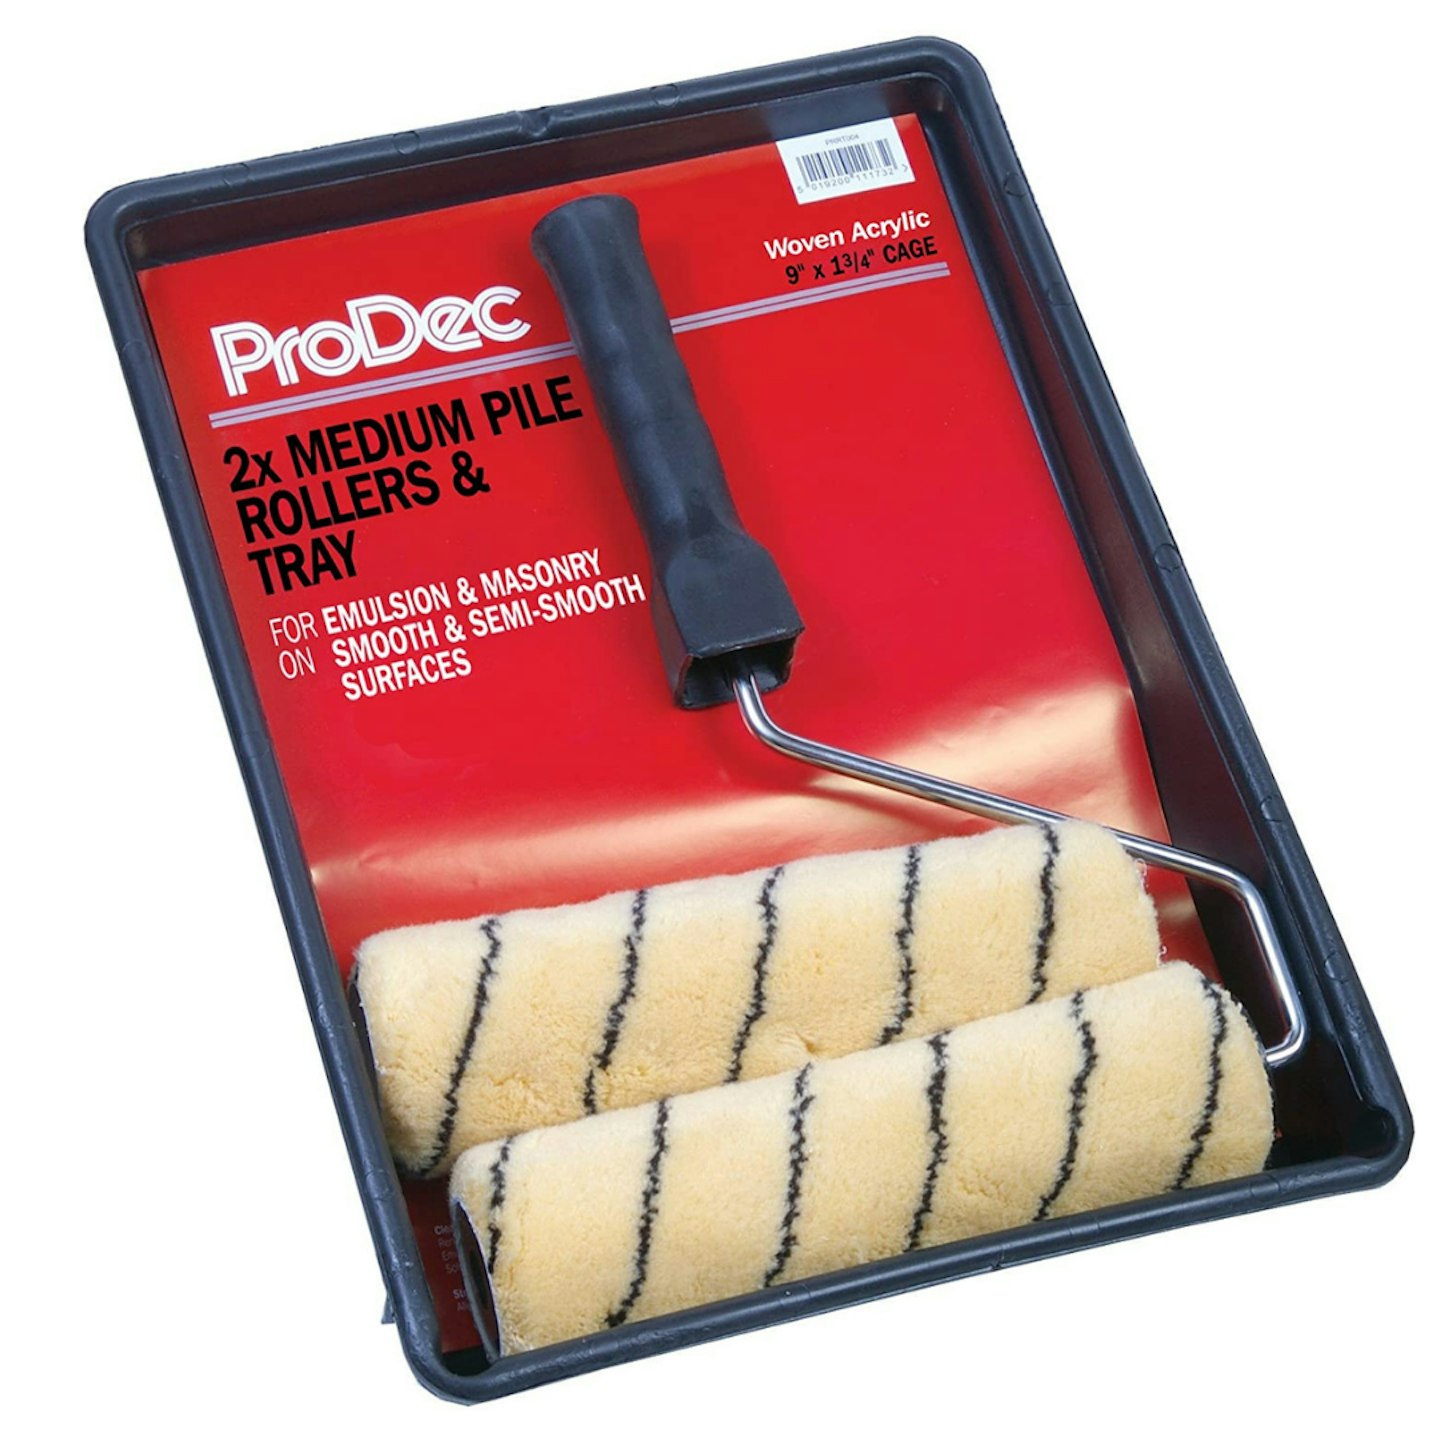 PRODEC 9" Trade Professional Medium Pile Roller Kit